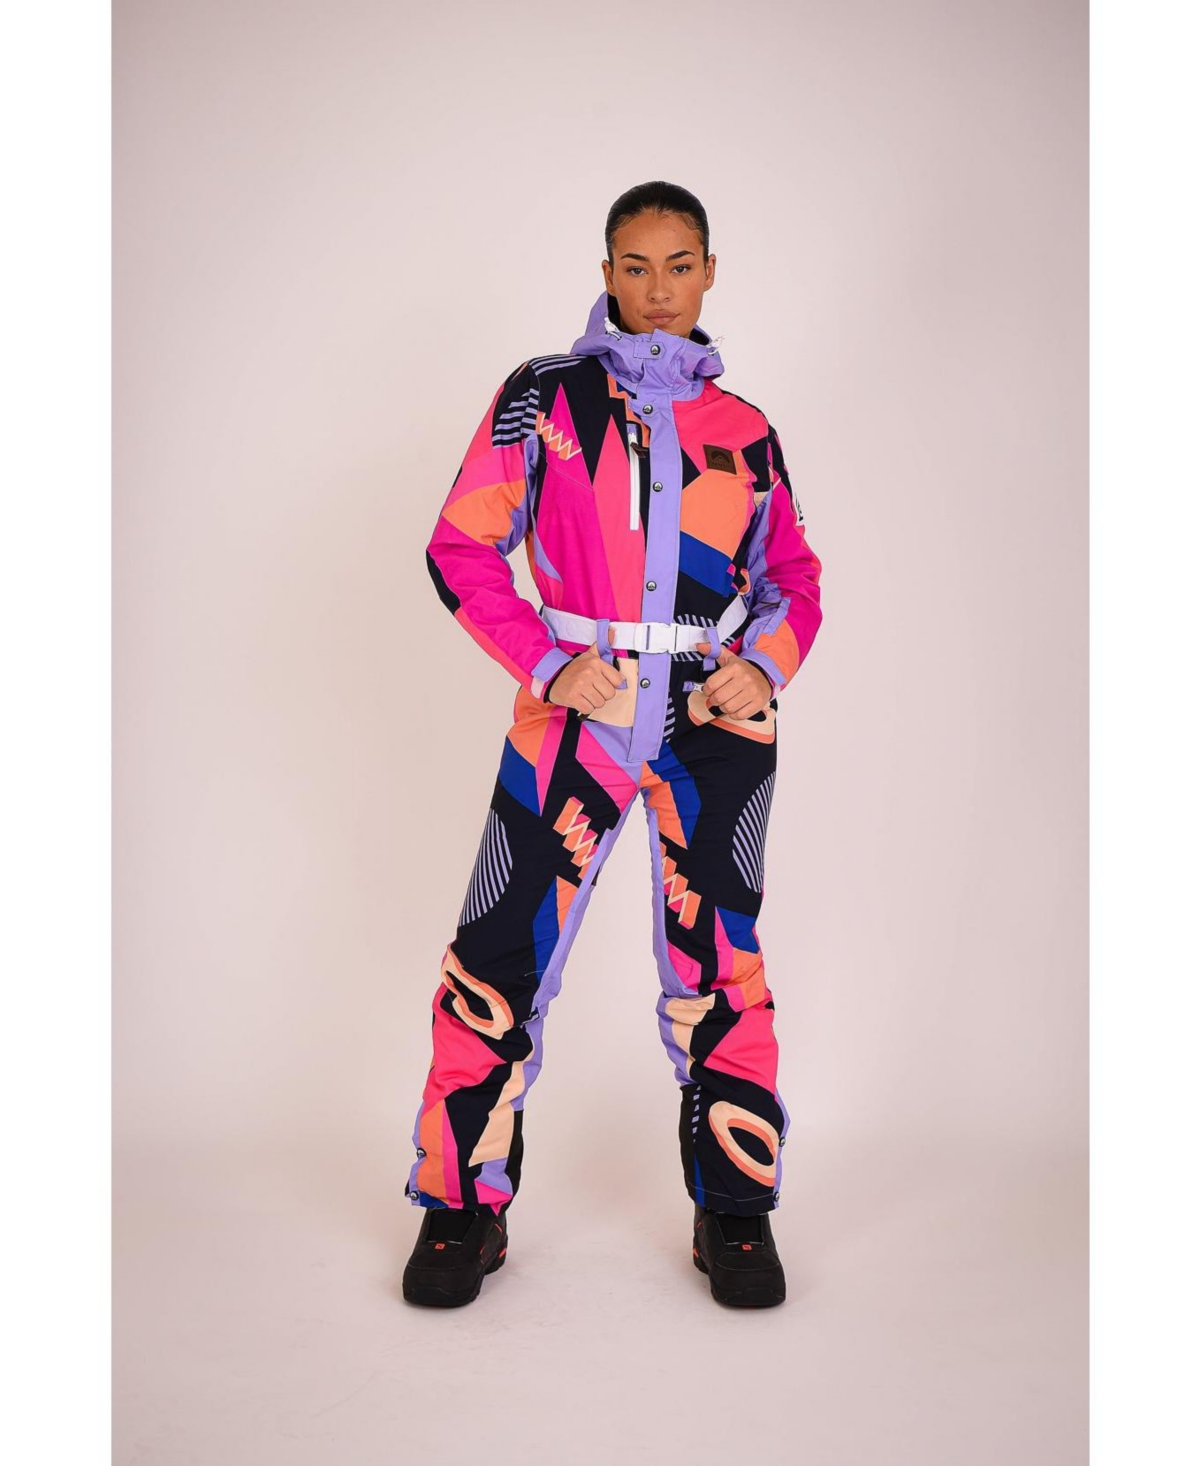 Hotstepper Curved Women's Ski Suit - Multi